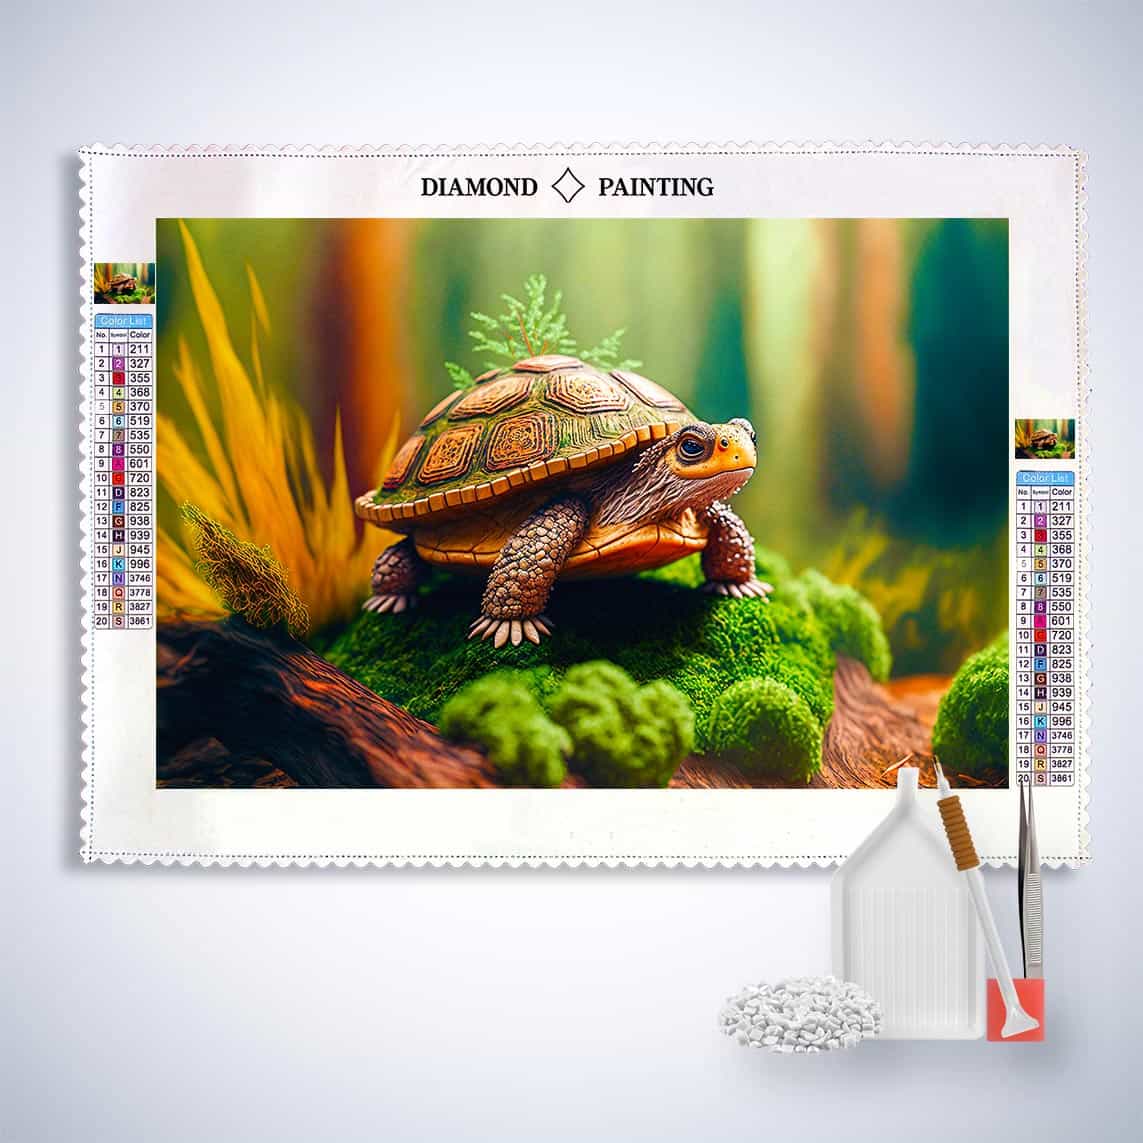 Diamond Painting - Schildkröte im Wald - gedruckt in Ultra-HD - Horizontal, Schildkröte, Tiere